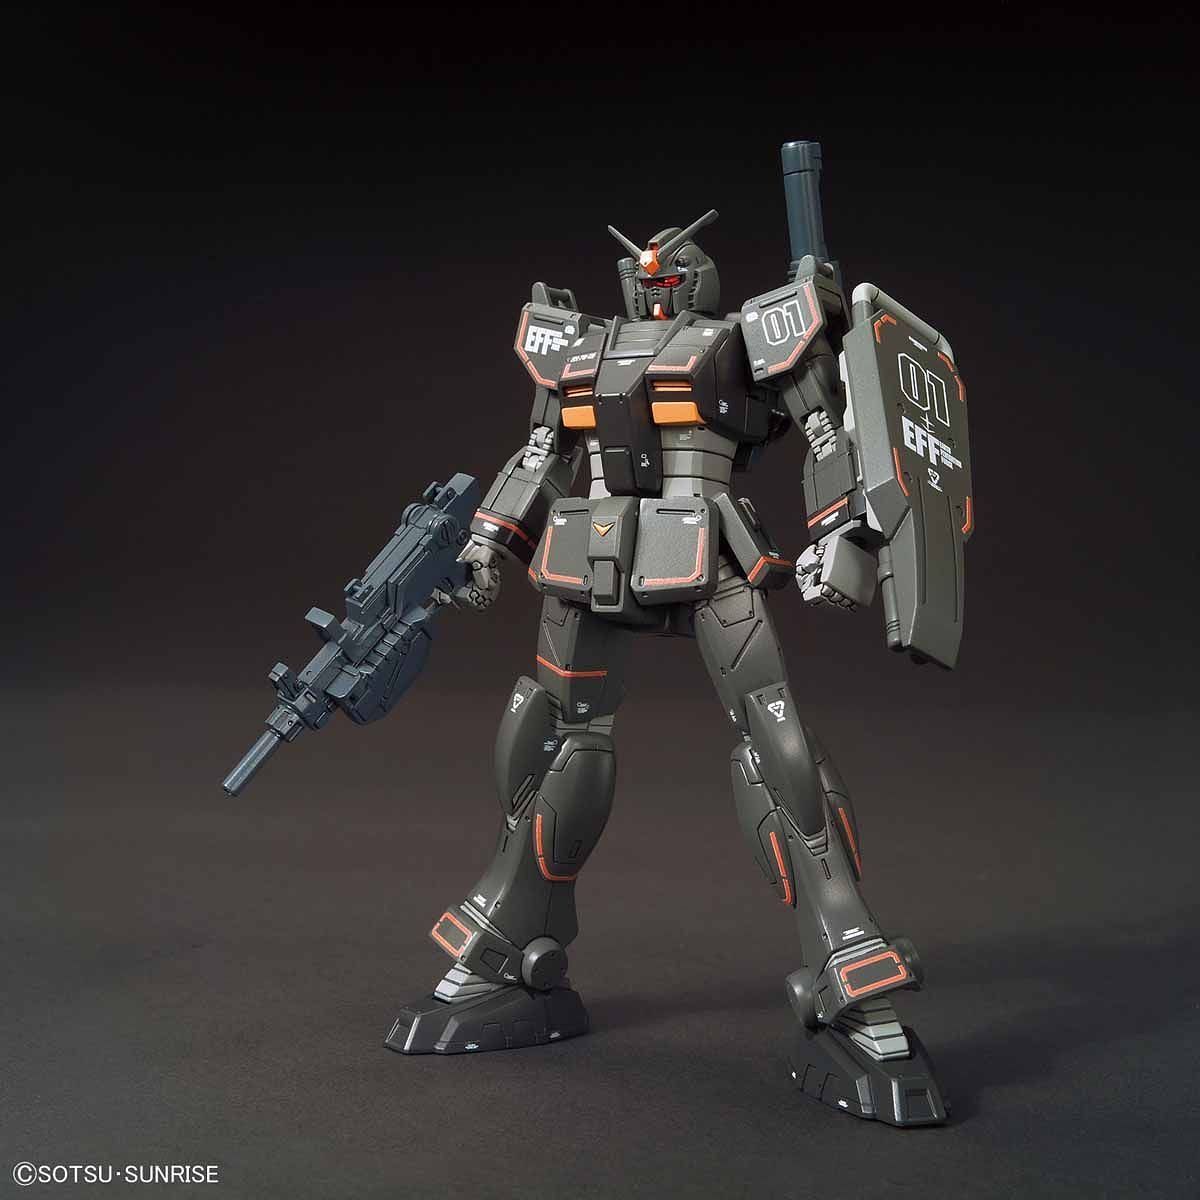 HG Gundam Local Type (North American Front)